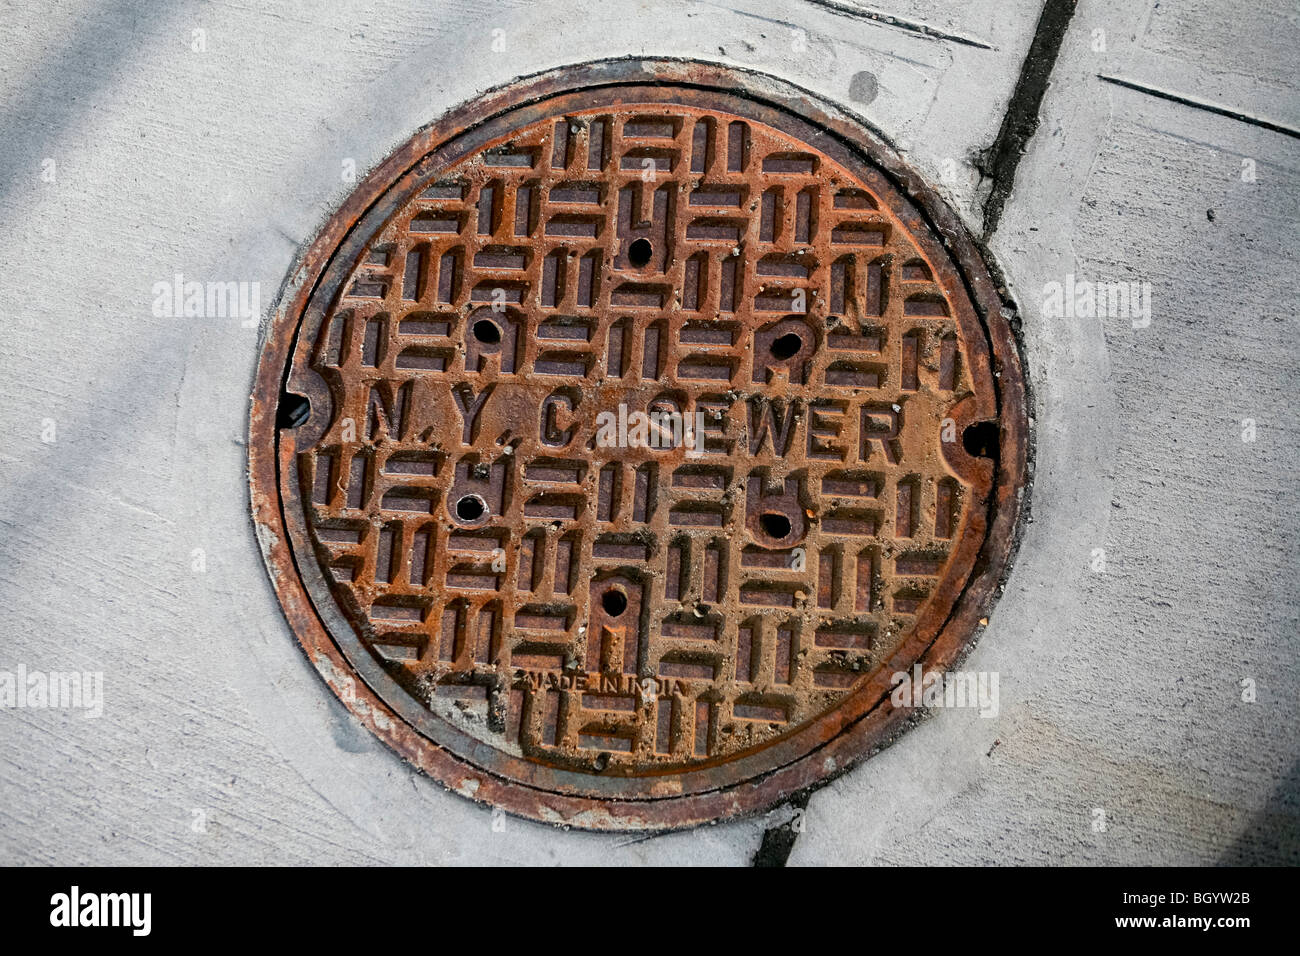 New York city sewer plate Stock Photo